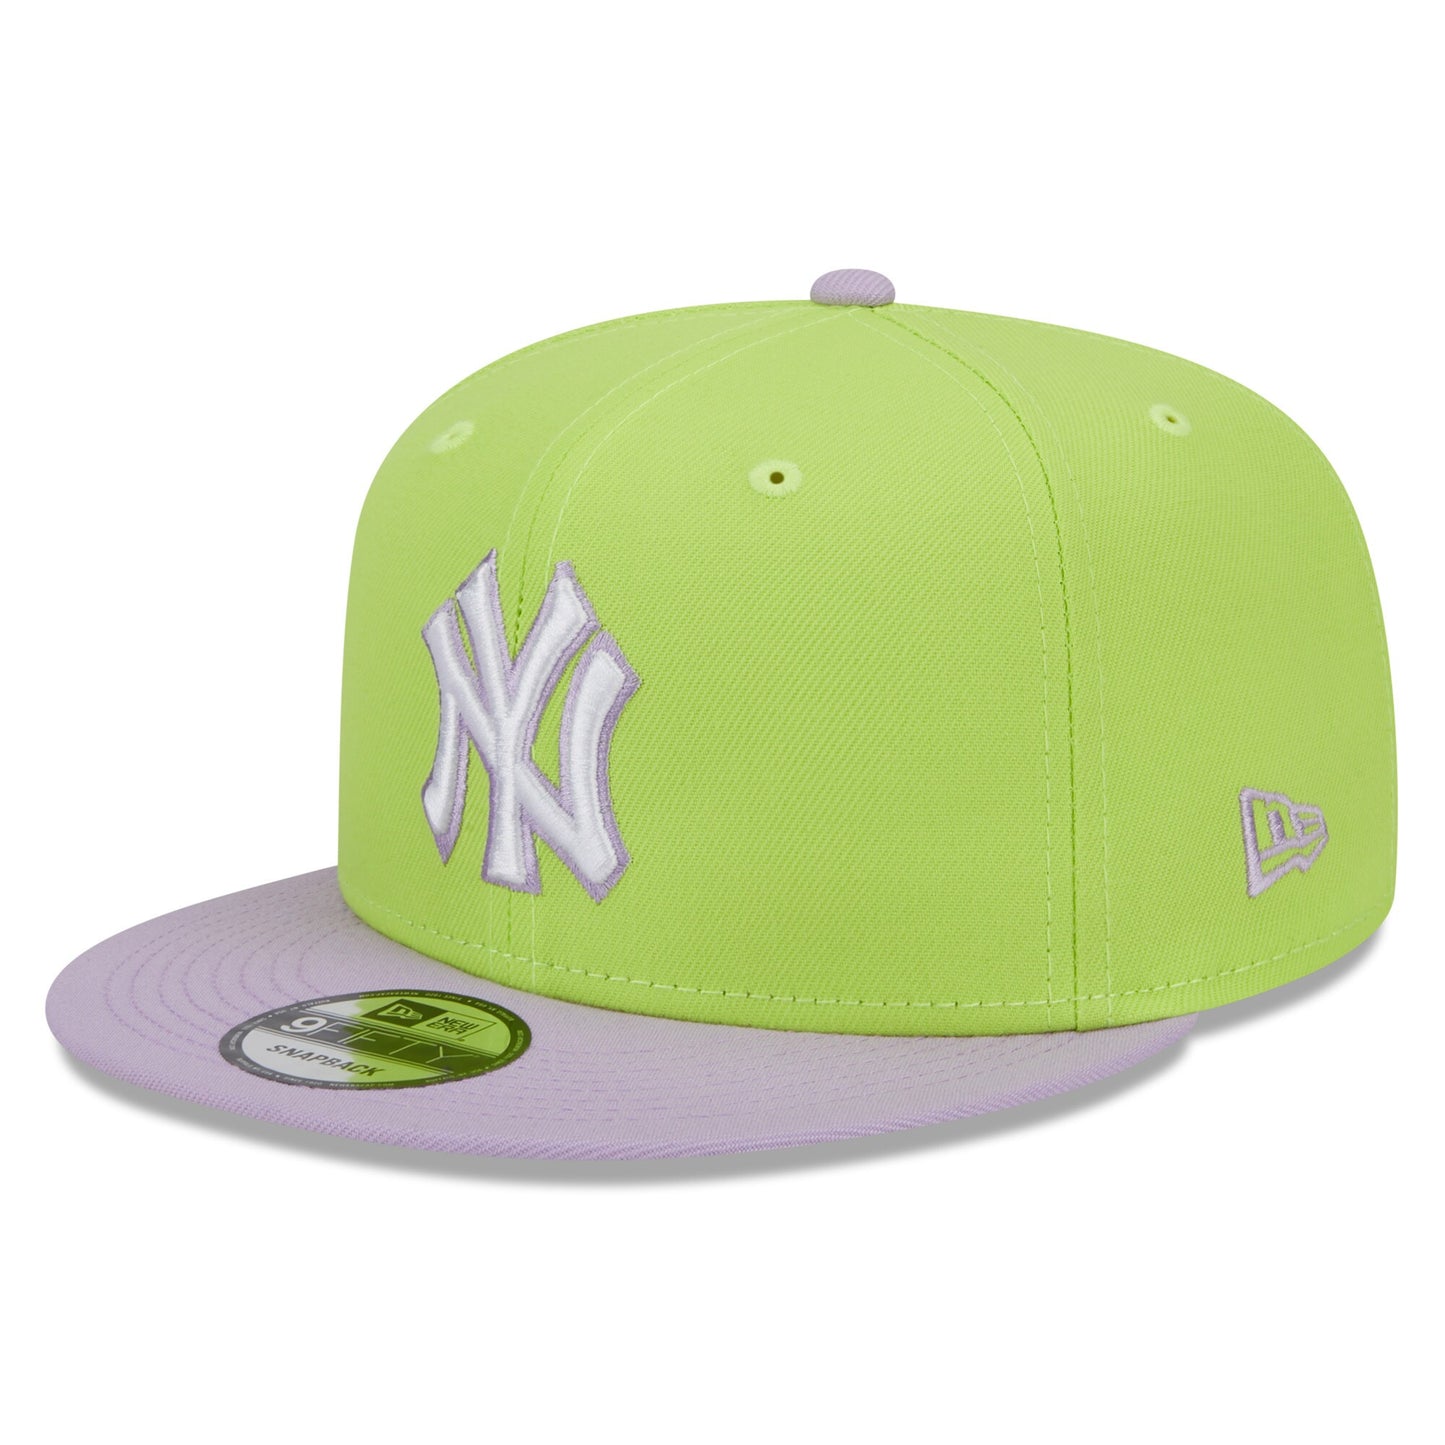 New York Yankees New Era Spring Basic Two-Tone 9FIFTY Snapback Hat - Neon Green/Purple